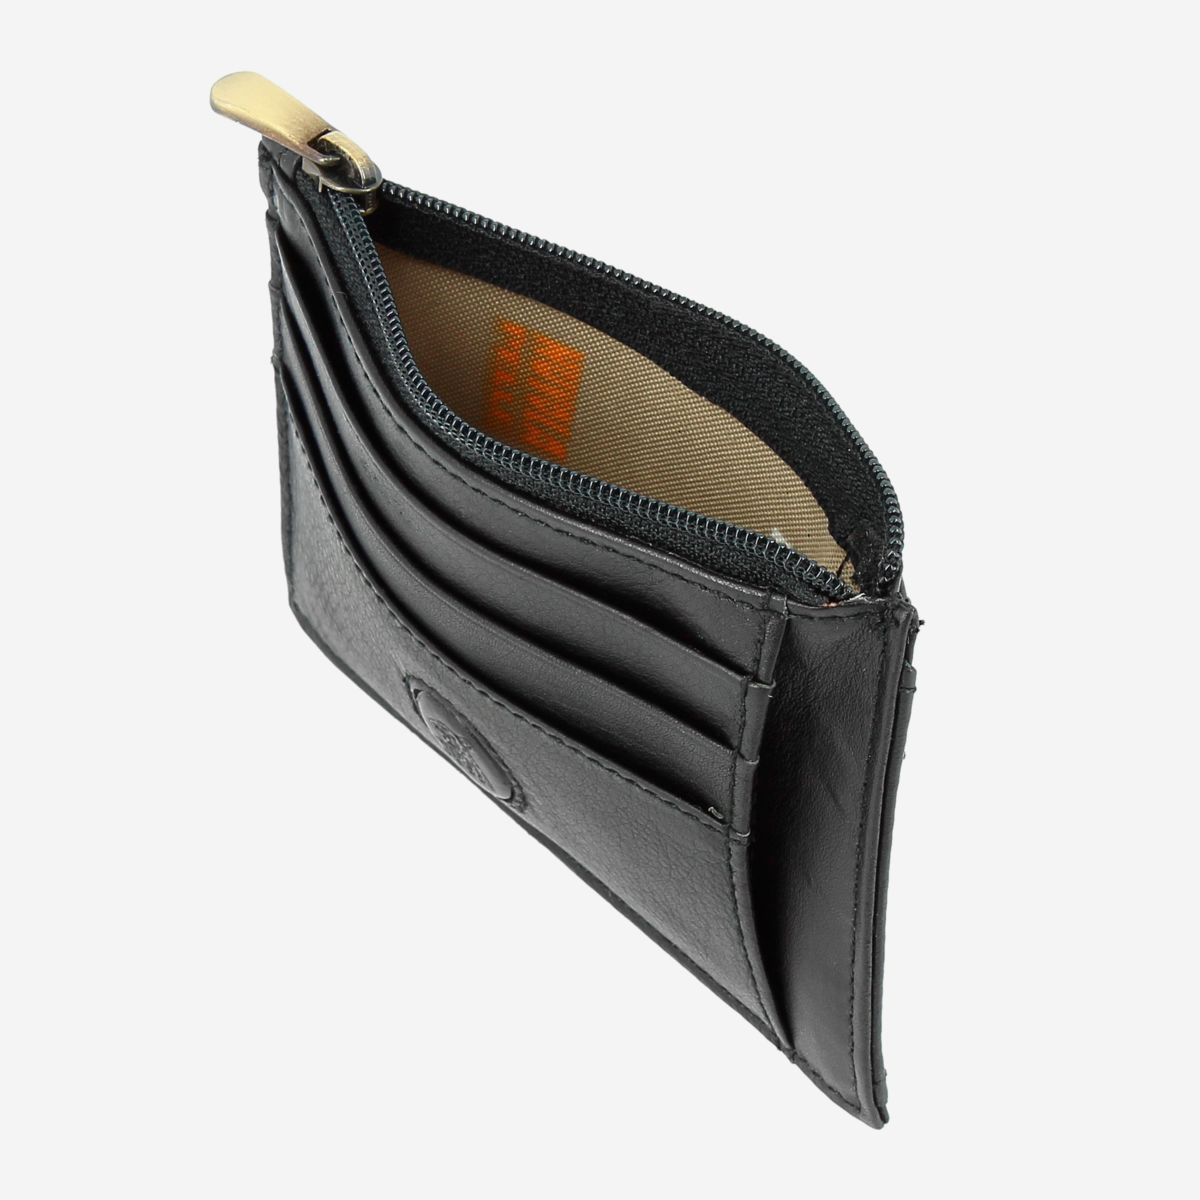 NUVOLA PELLE Slim Leather Credit Card Wallet - Black